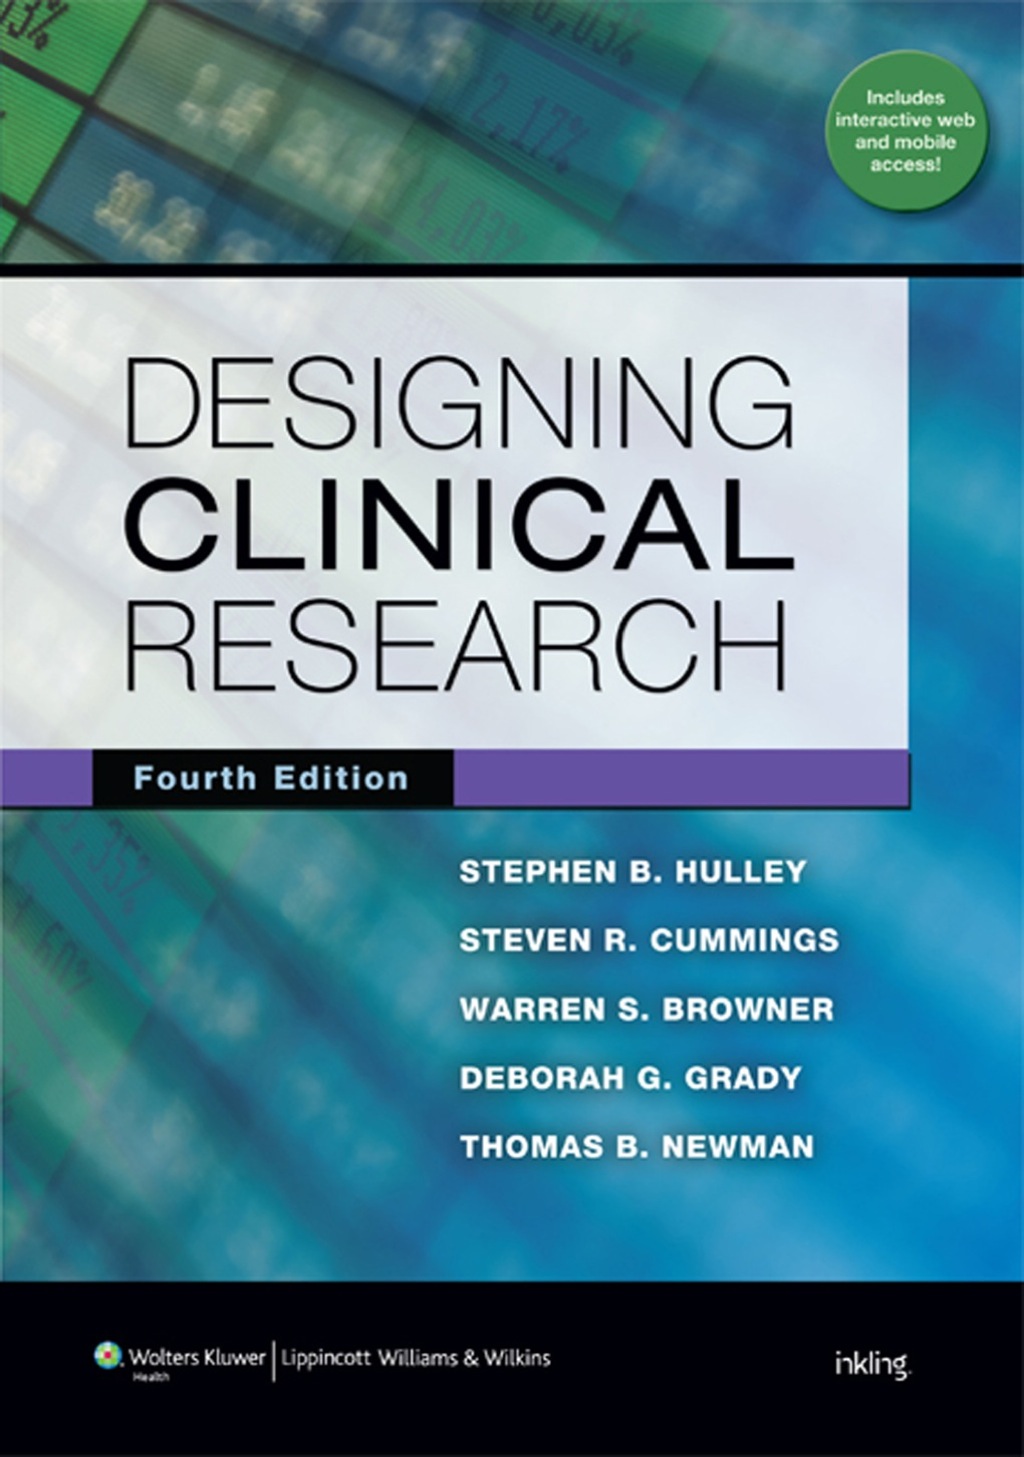 Designing Clinical Research (eBook) - Stephen B. Hulley; Steven R. Cummings; Warren S. Browner; Deborah G. Grady; Thomas B. Newman